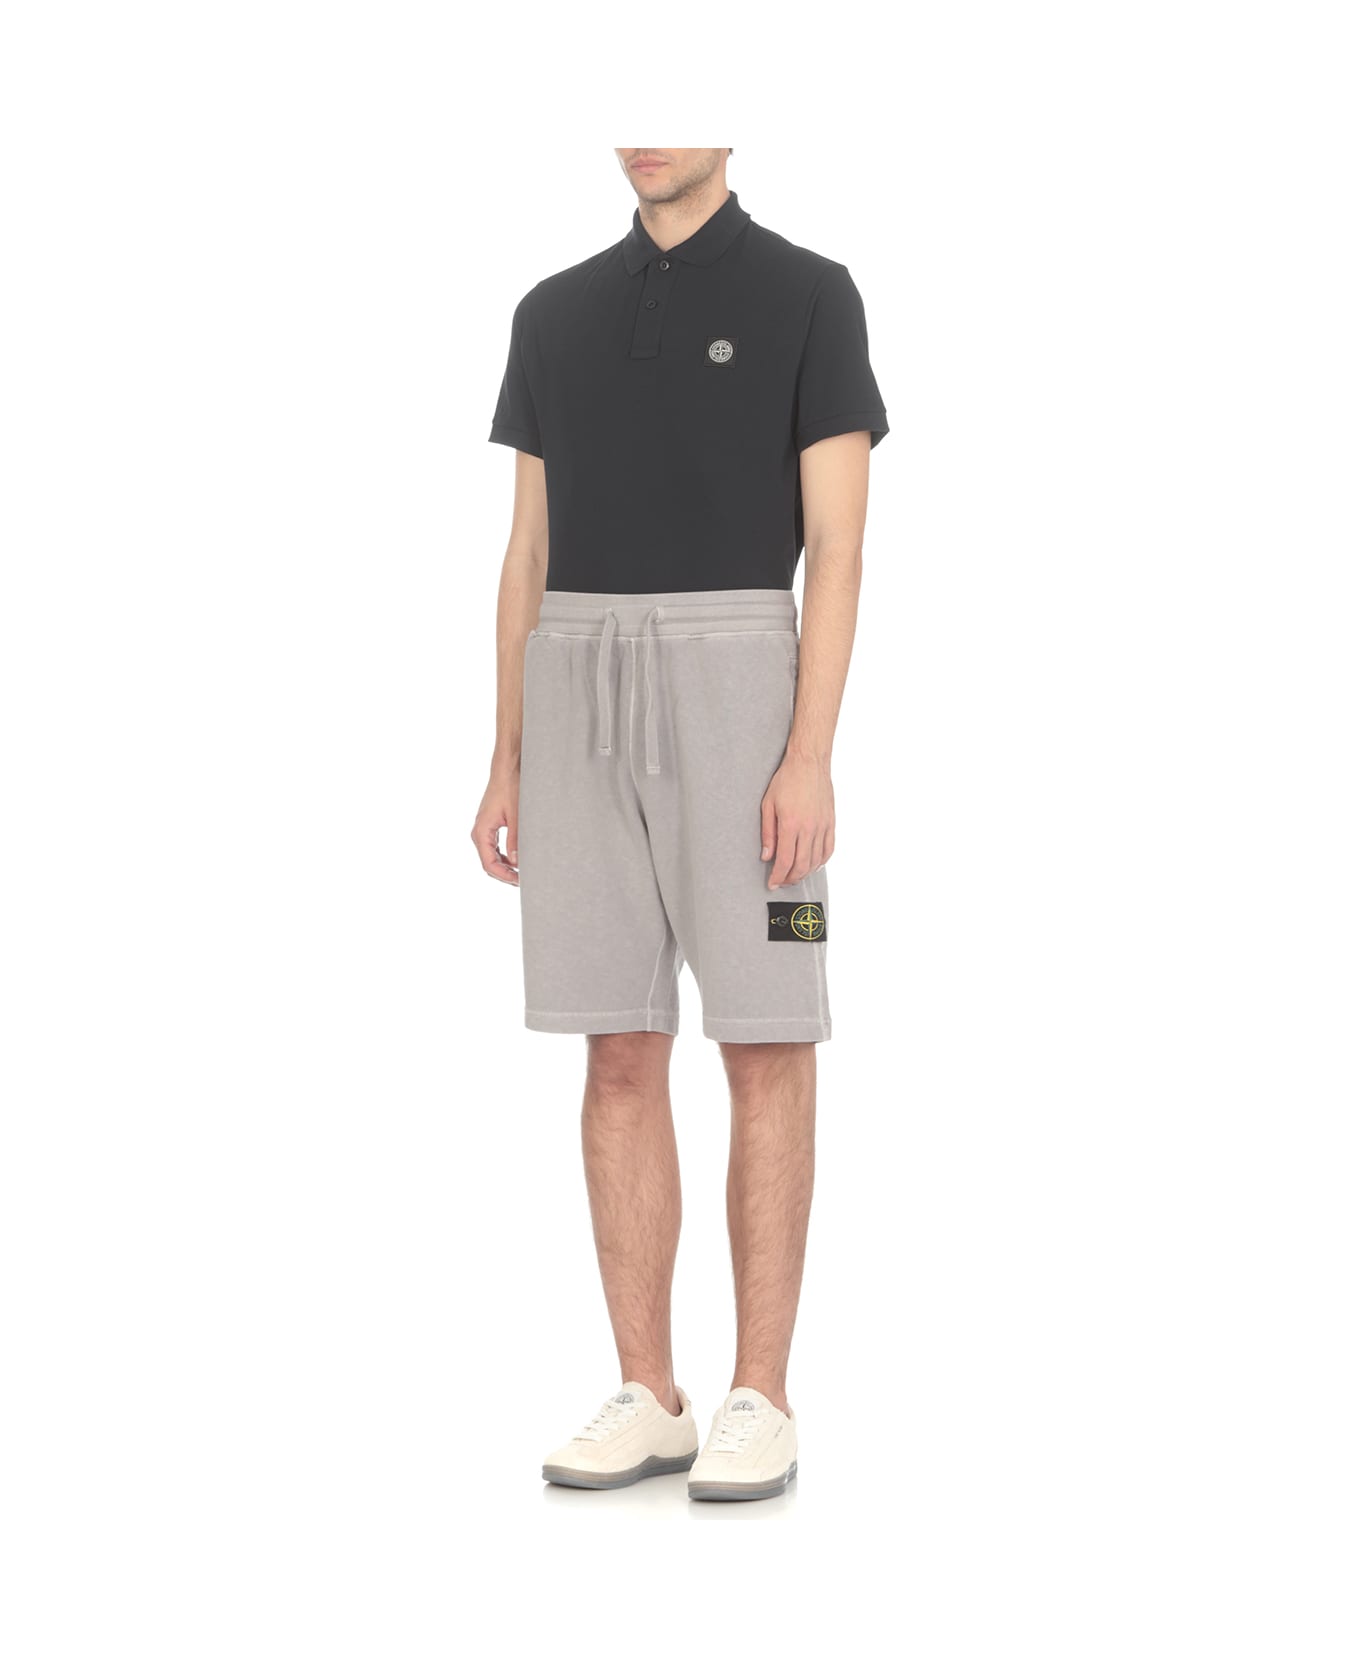 Stone Island Cotton Bermuda Shorts - Grey